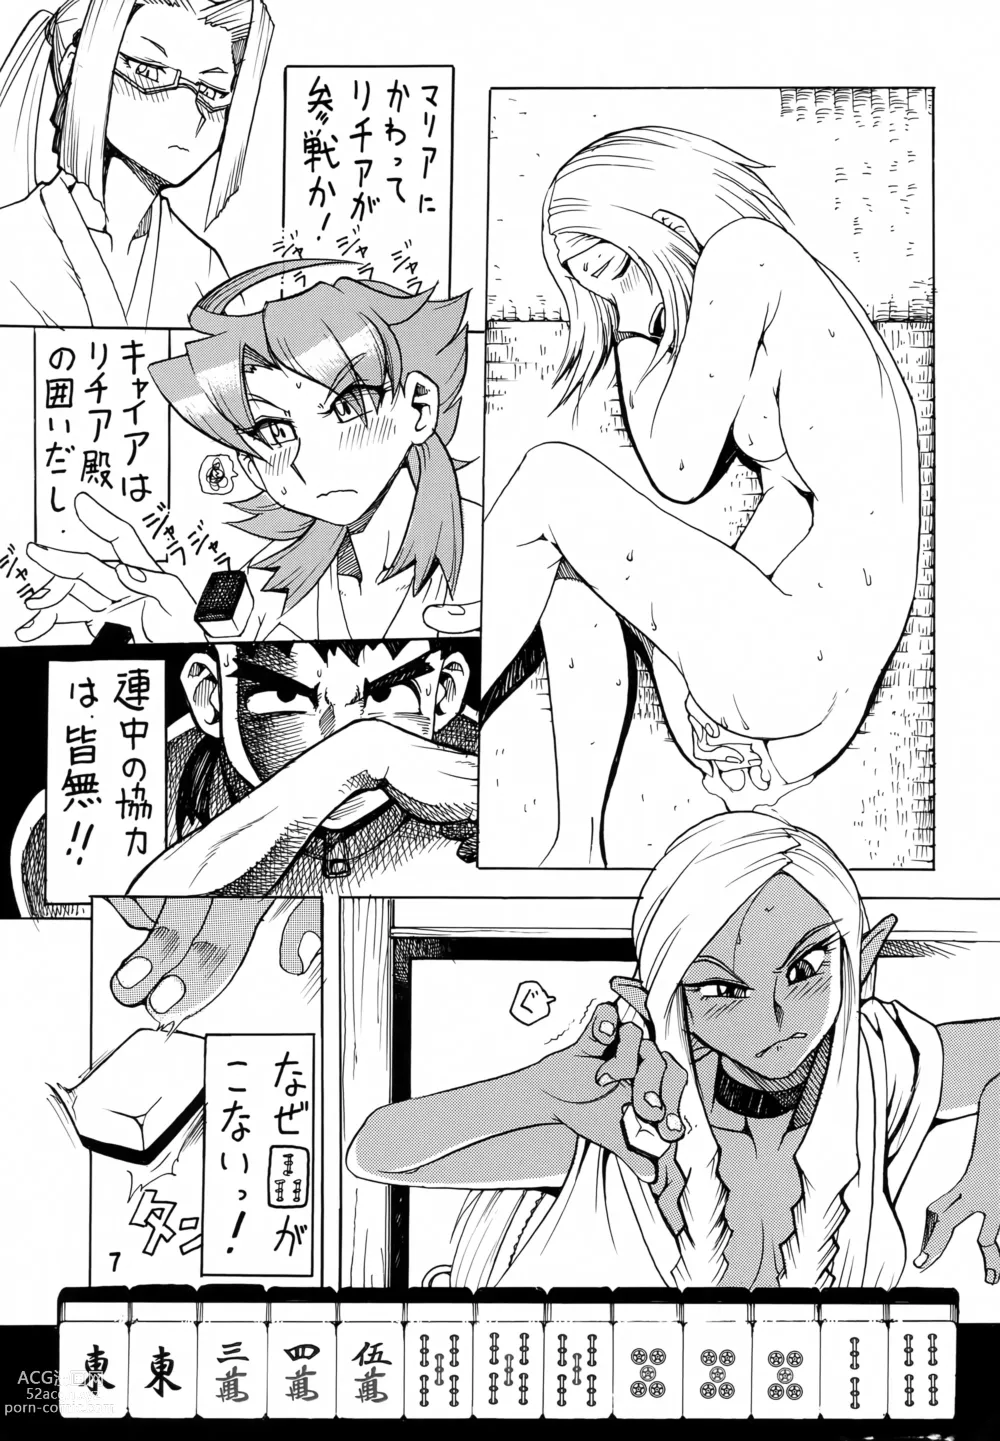 Page 6 of doujinshi Isekai no Jongkishi Monogatari